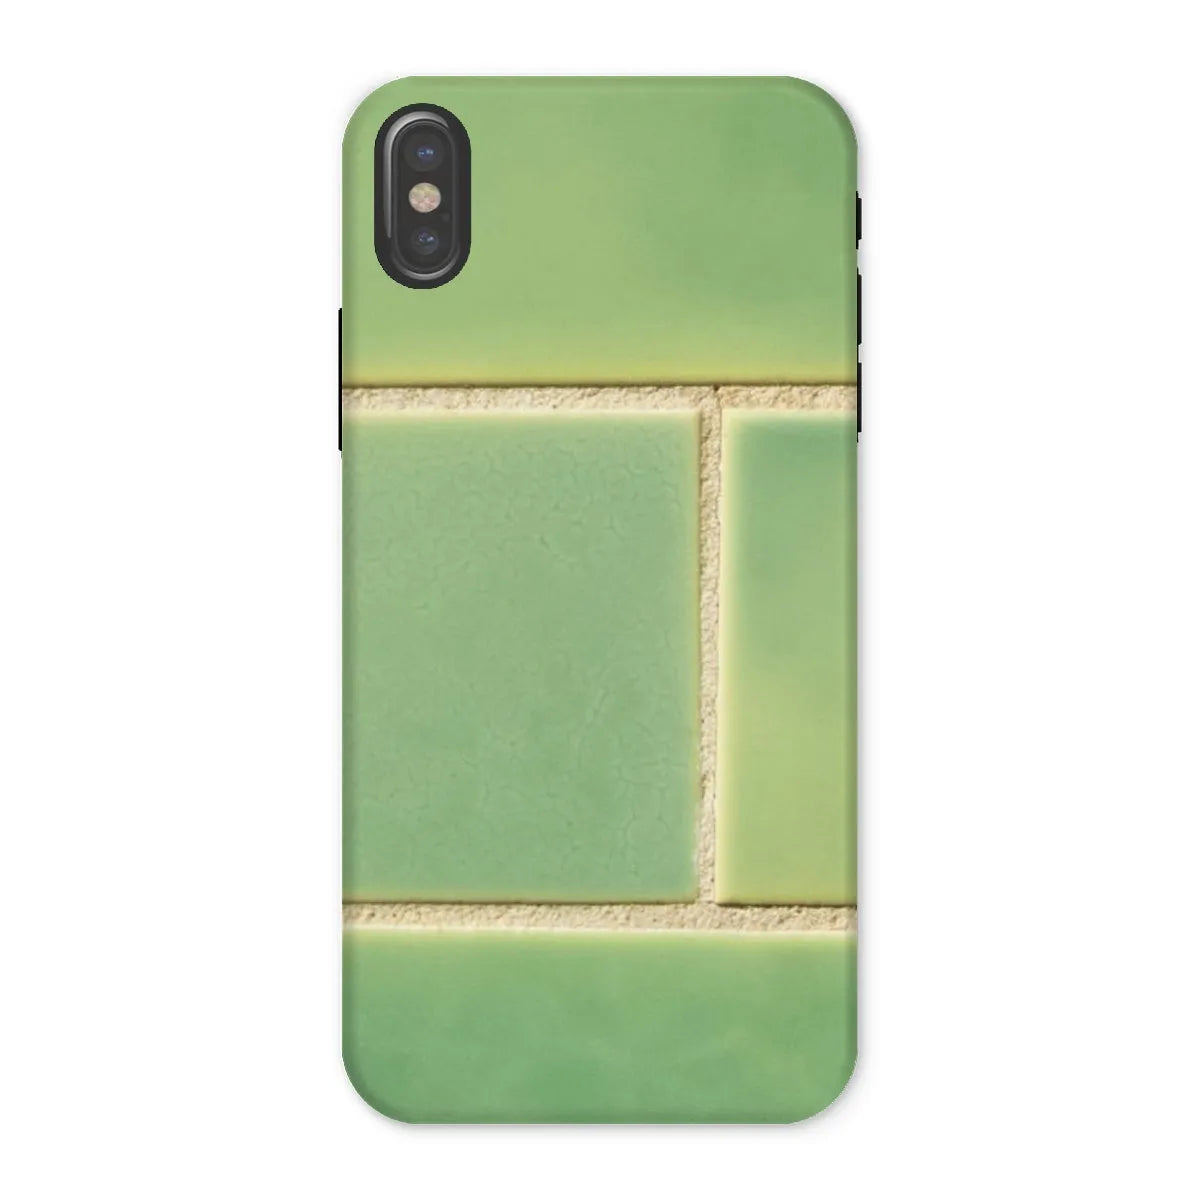 Emerald City Tough Phone Case - Iphone x / Matte - Mobile Phone Cases - Aesthetic Art